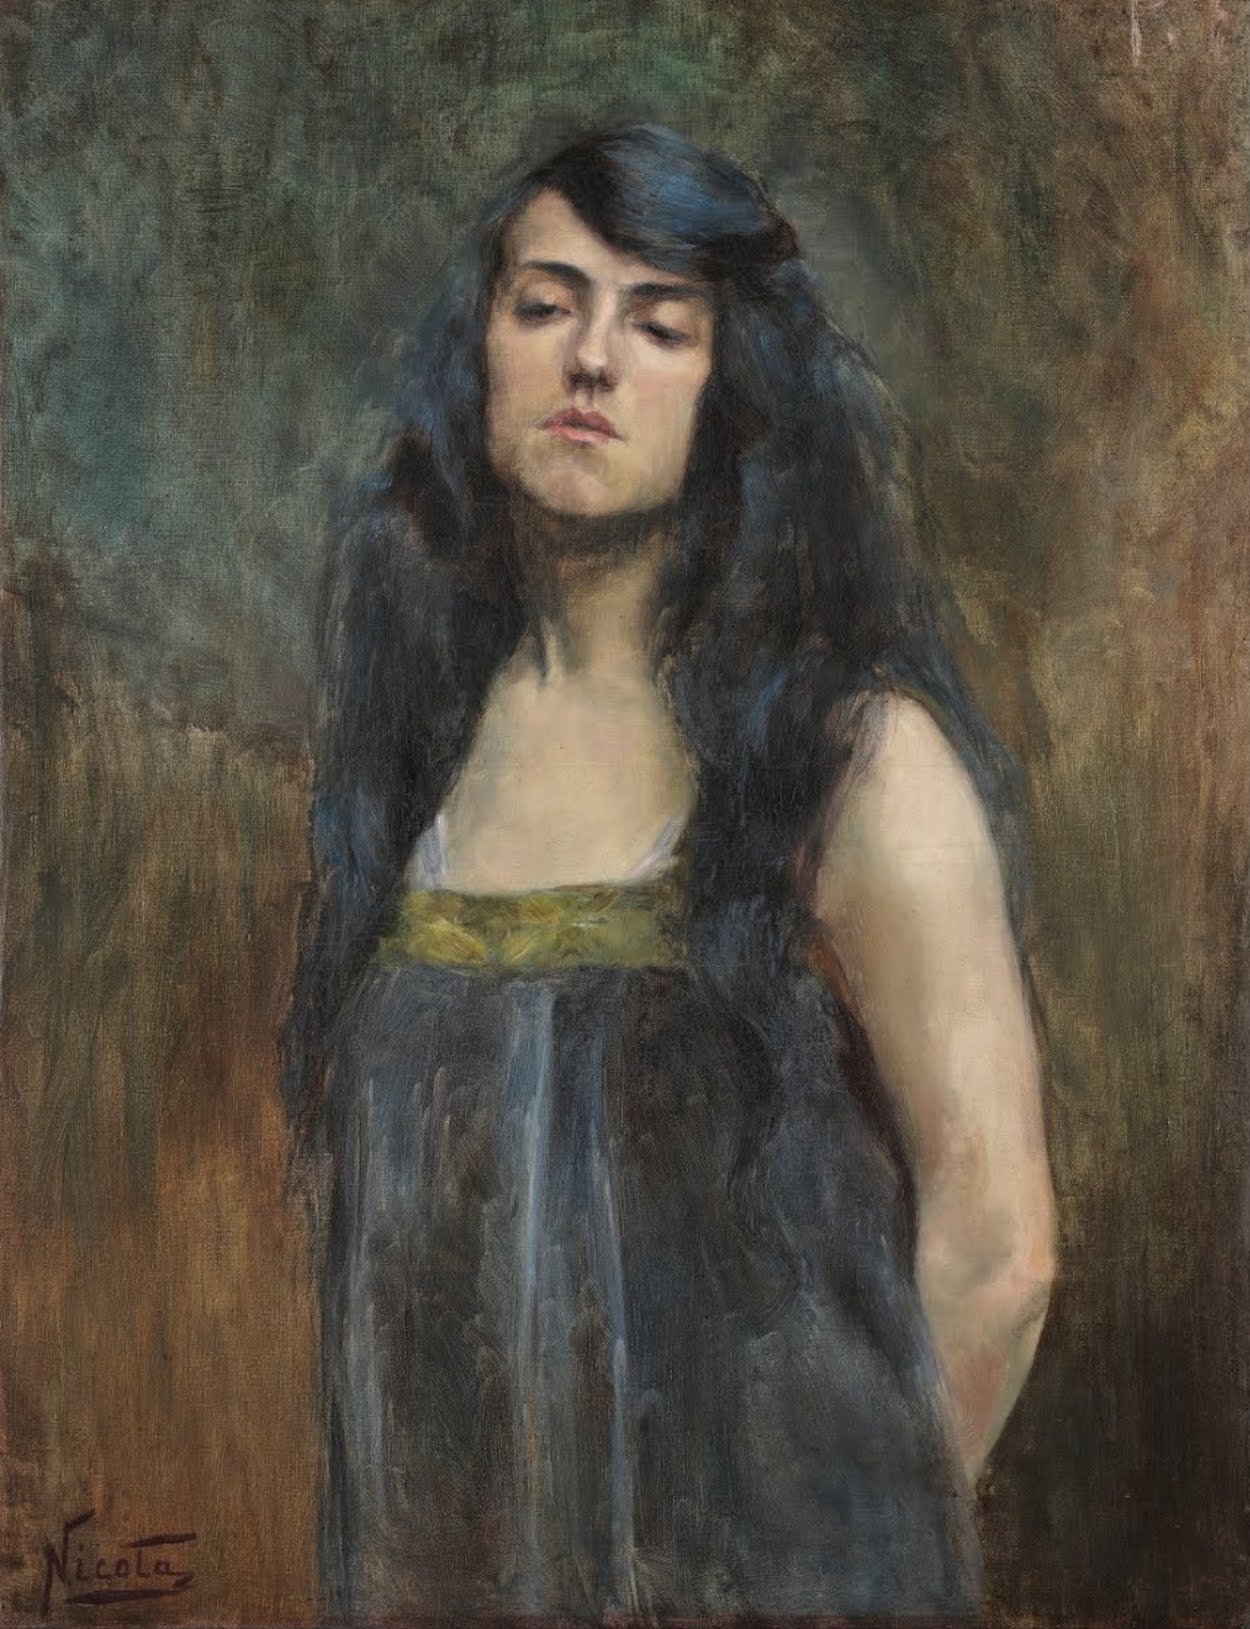 Никота Байо - 1870 - Август 22, 1923